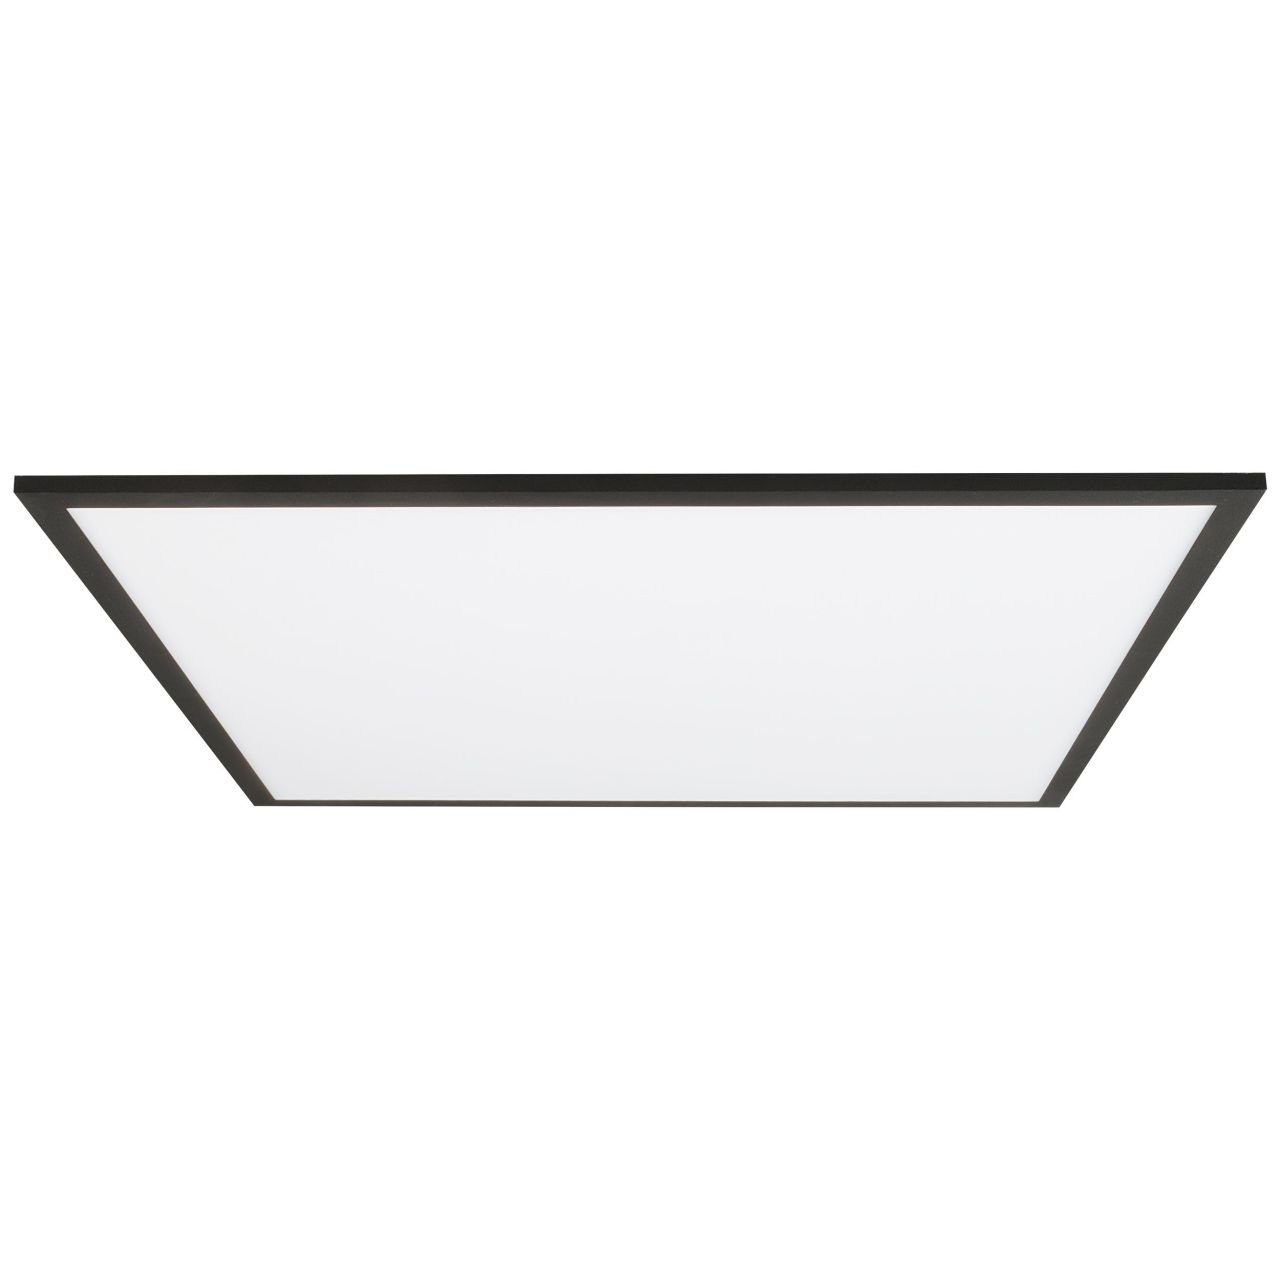 Brilliant Deckenleuchte Buffi, Metall/Kuns Deckenaufbau-Paneel Lampe, schwarz, 60x60cm sand 4000K, Buffi LED